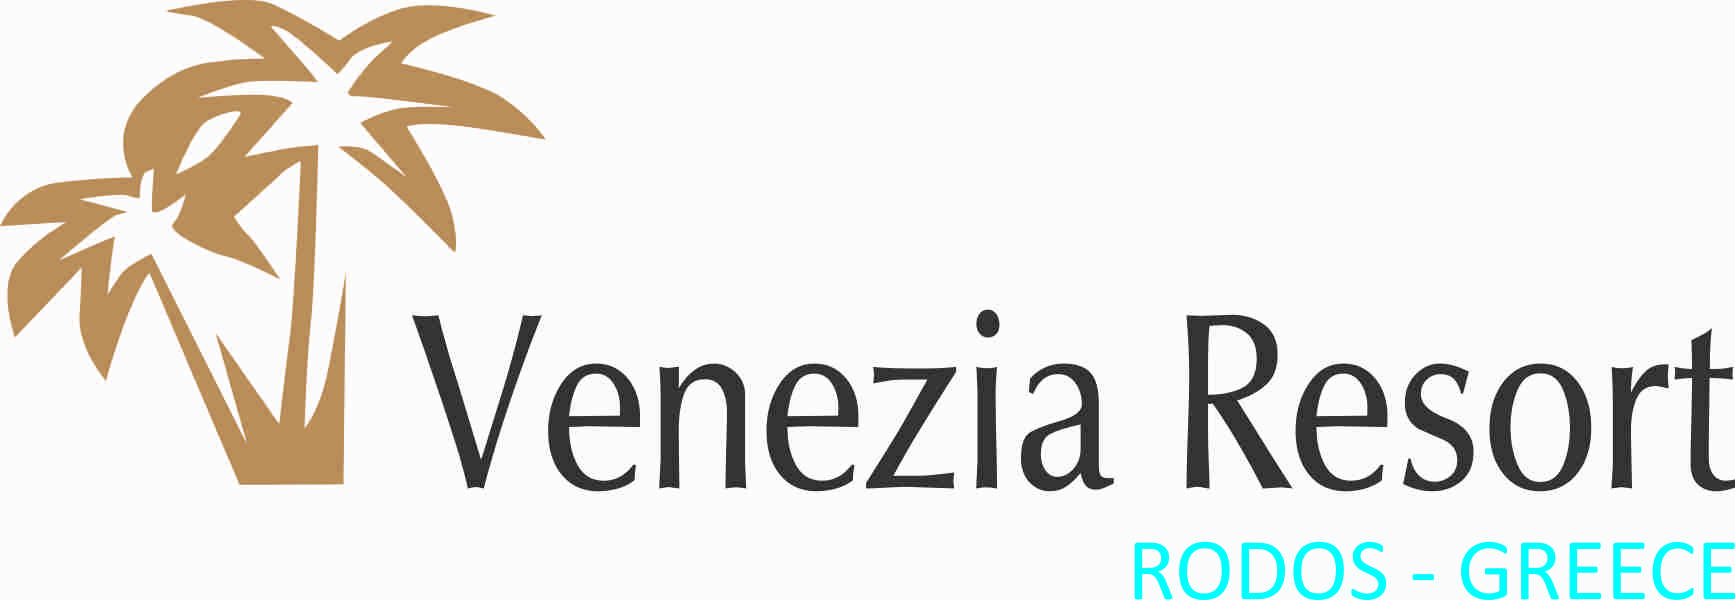 VENEZIA RESORT_logo.jpg